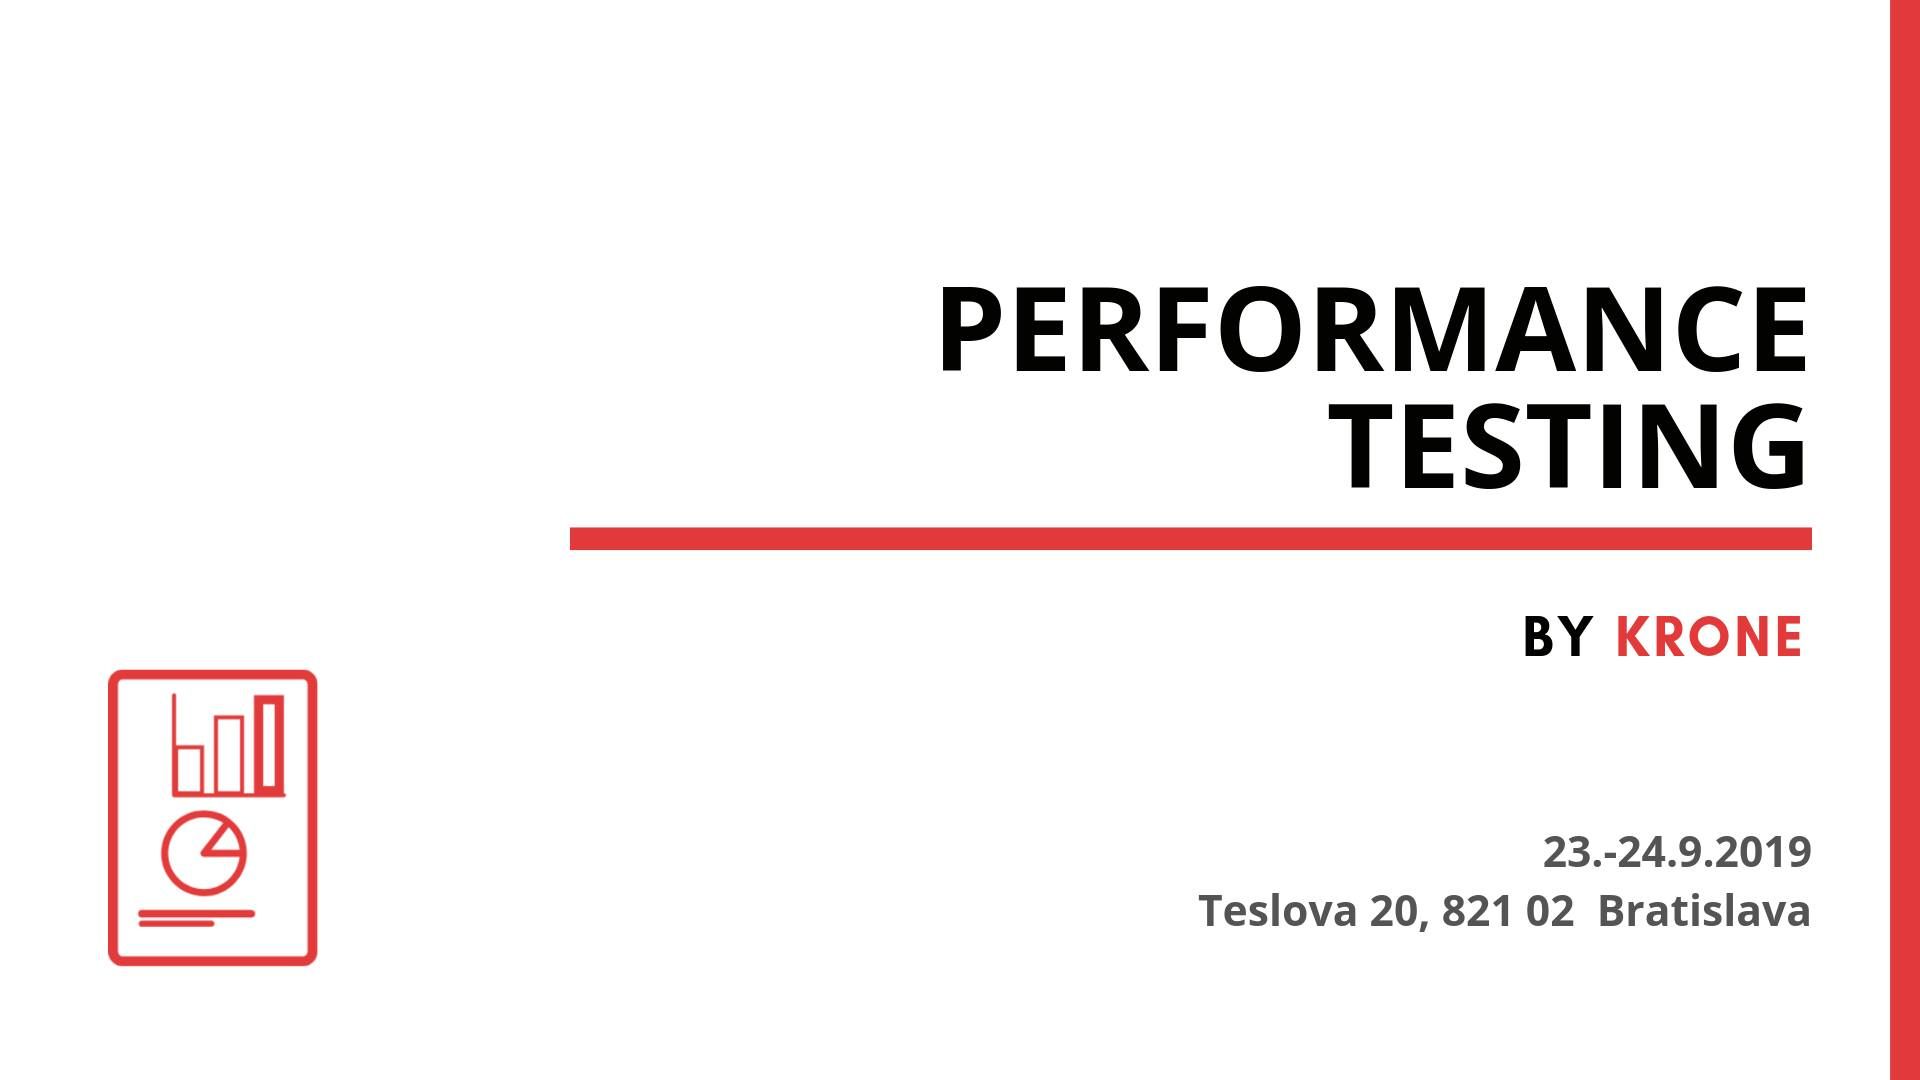 Performance Testing